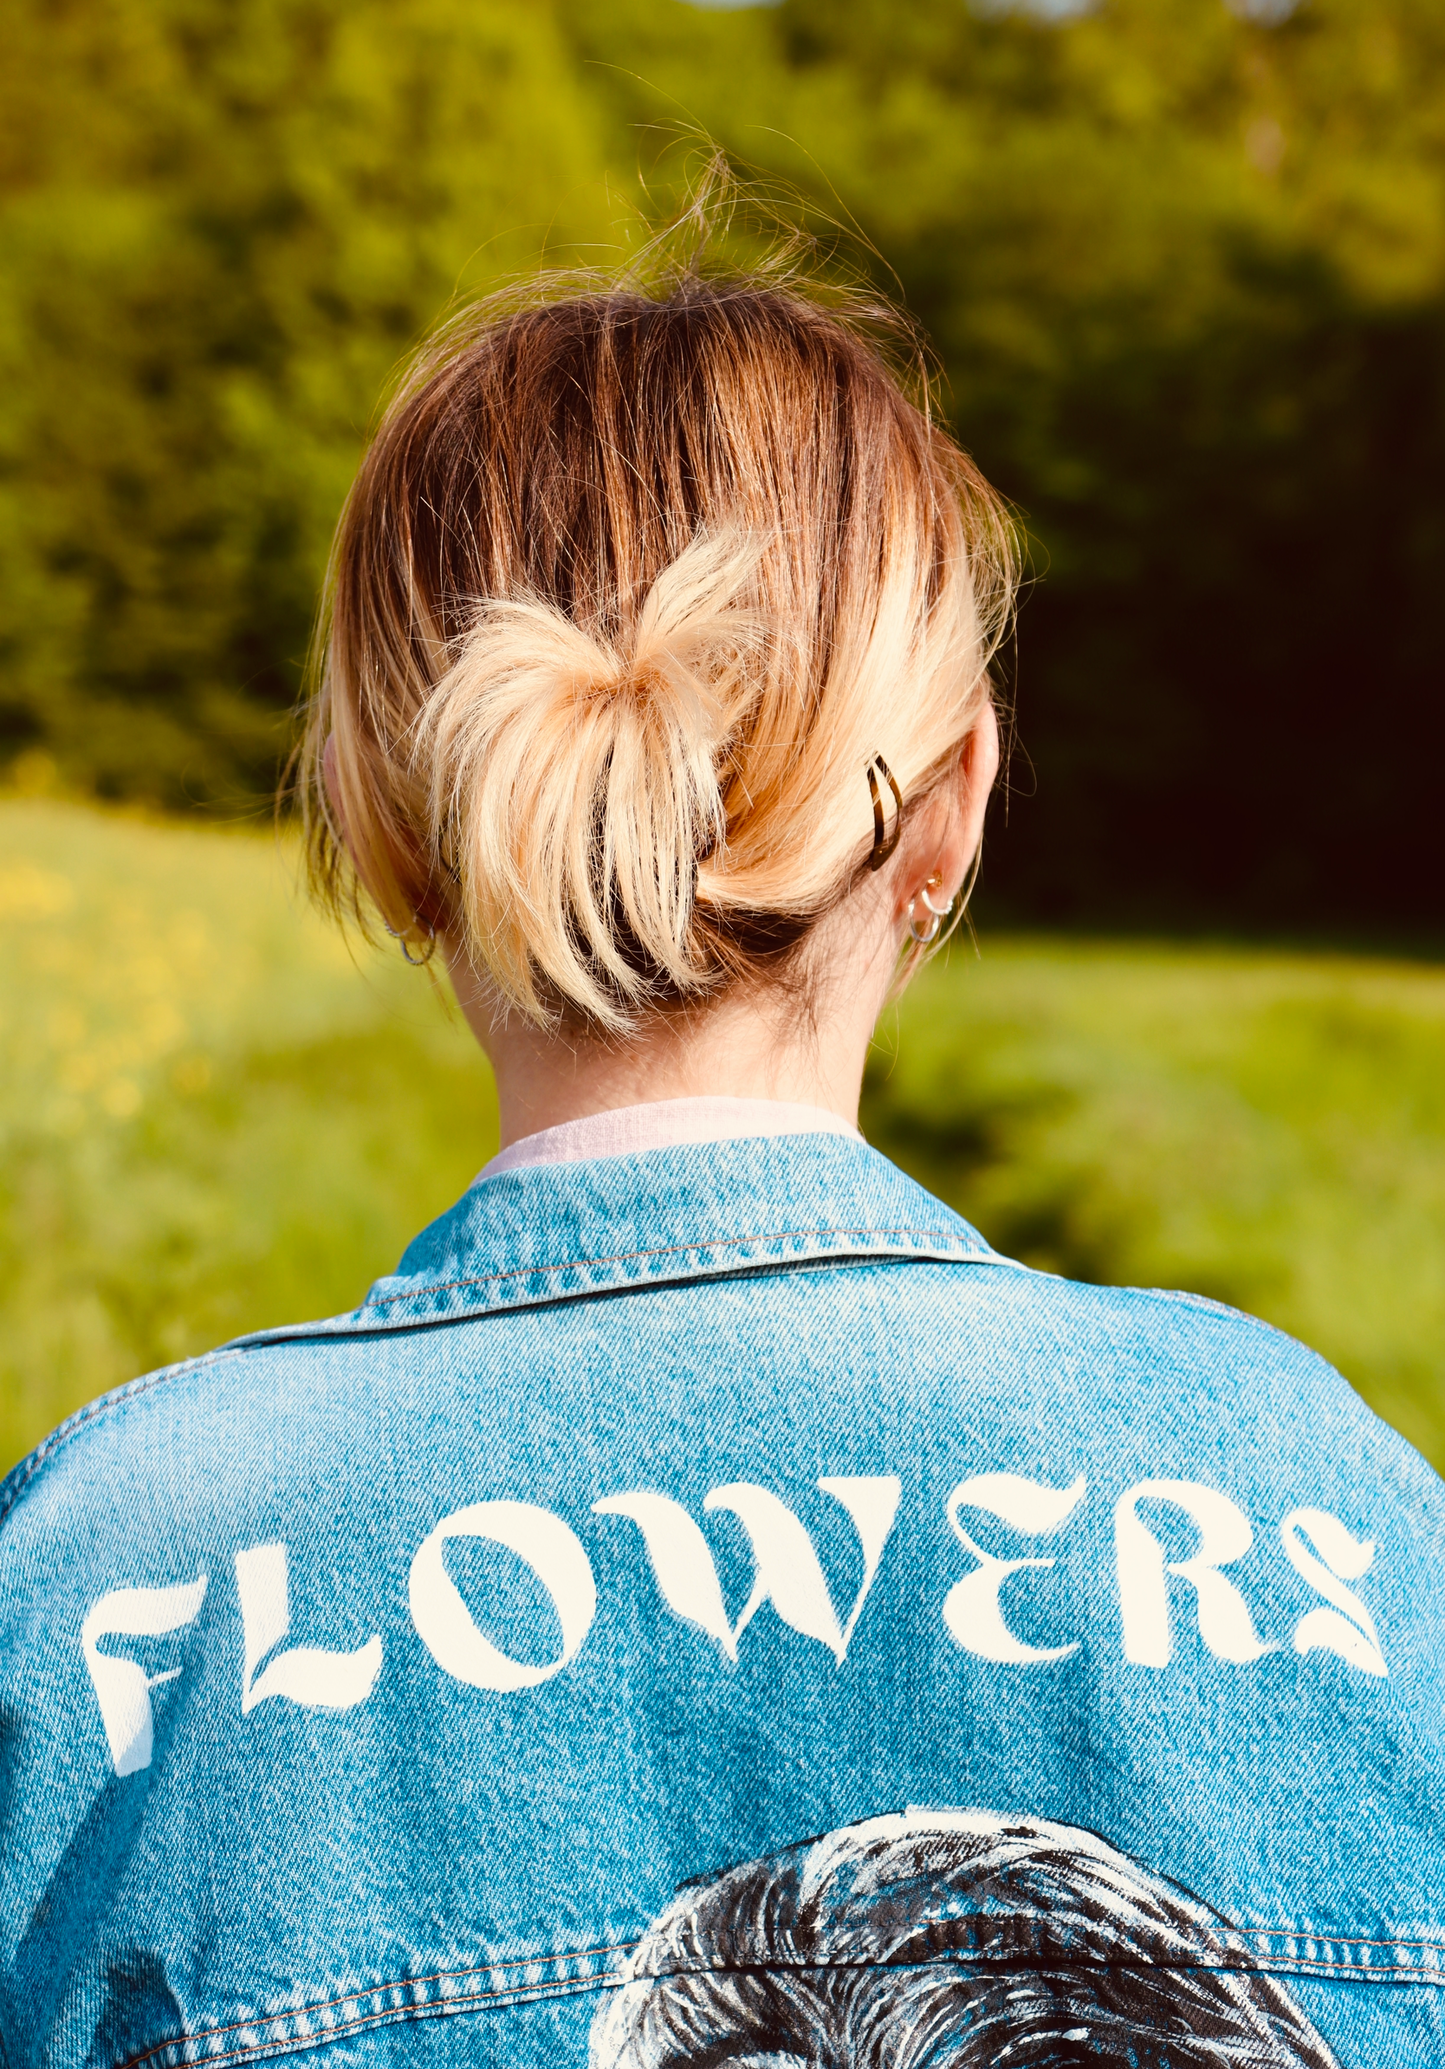 Custom Miley Cyrus - Flowers